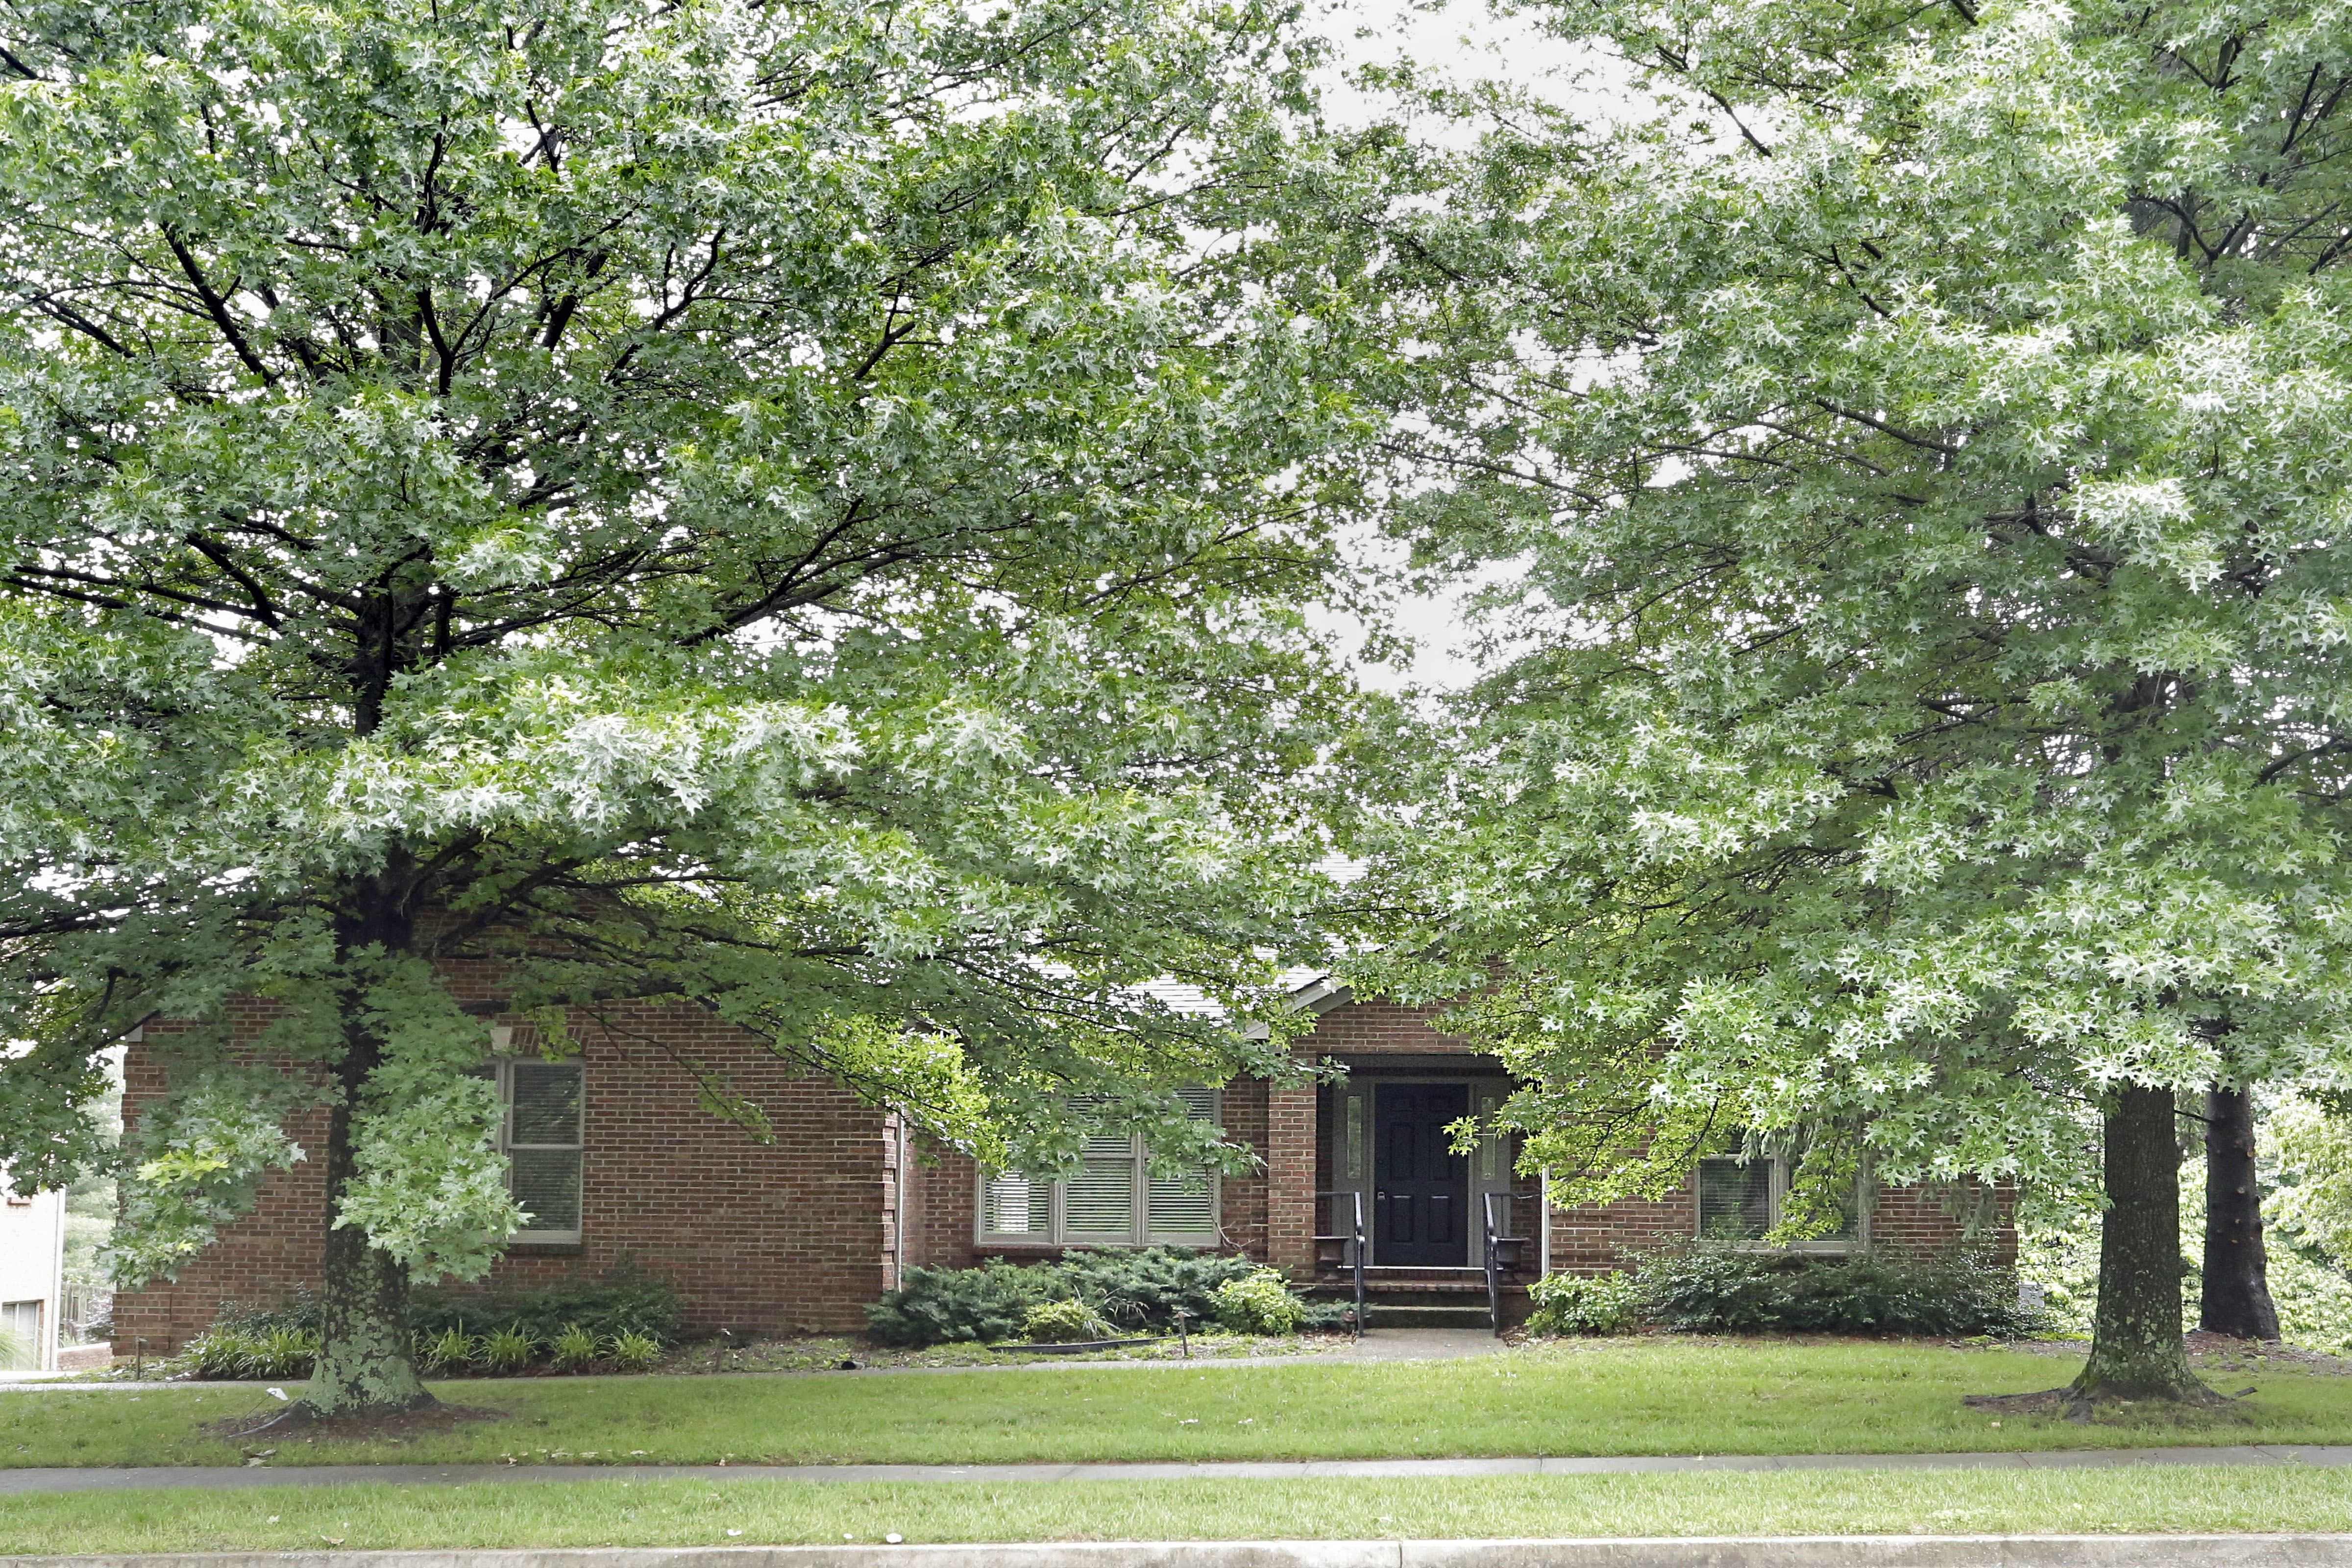 House amongst trees in Firebrook, Lexington, Kentucky